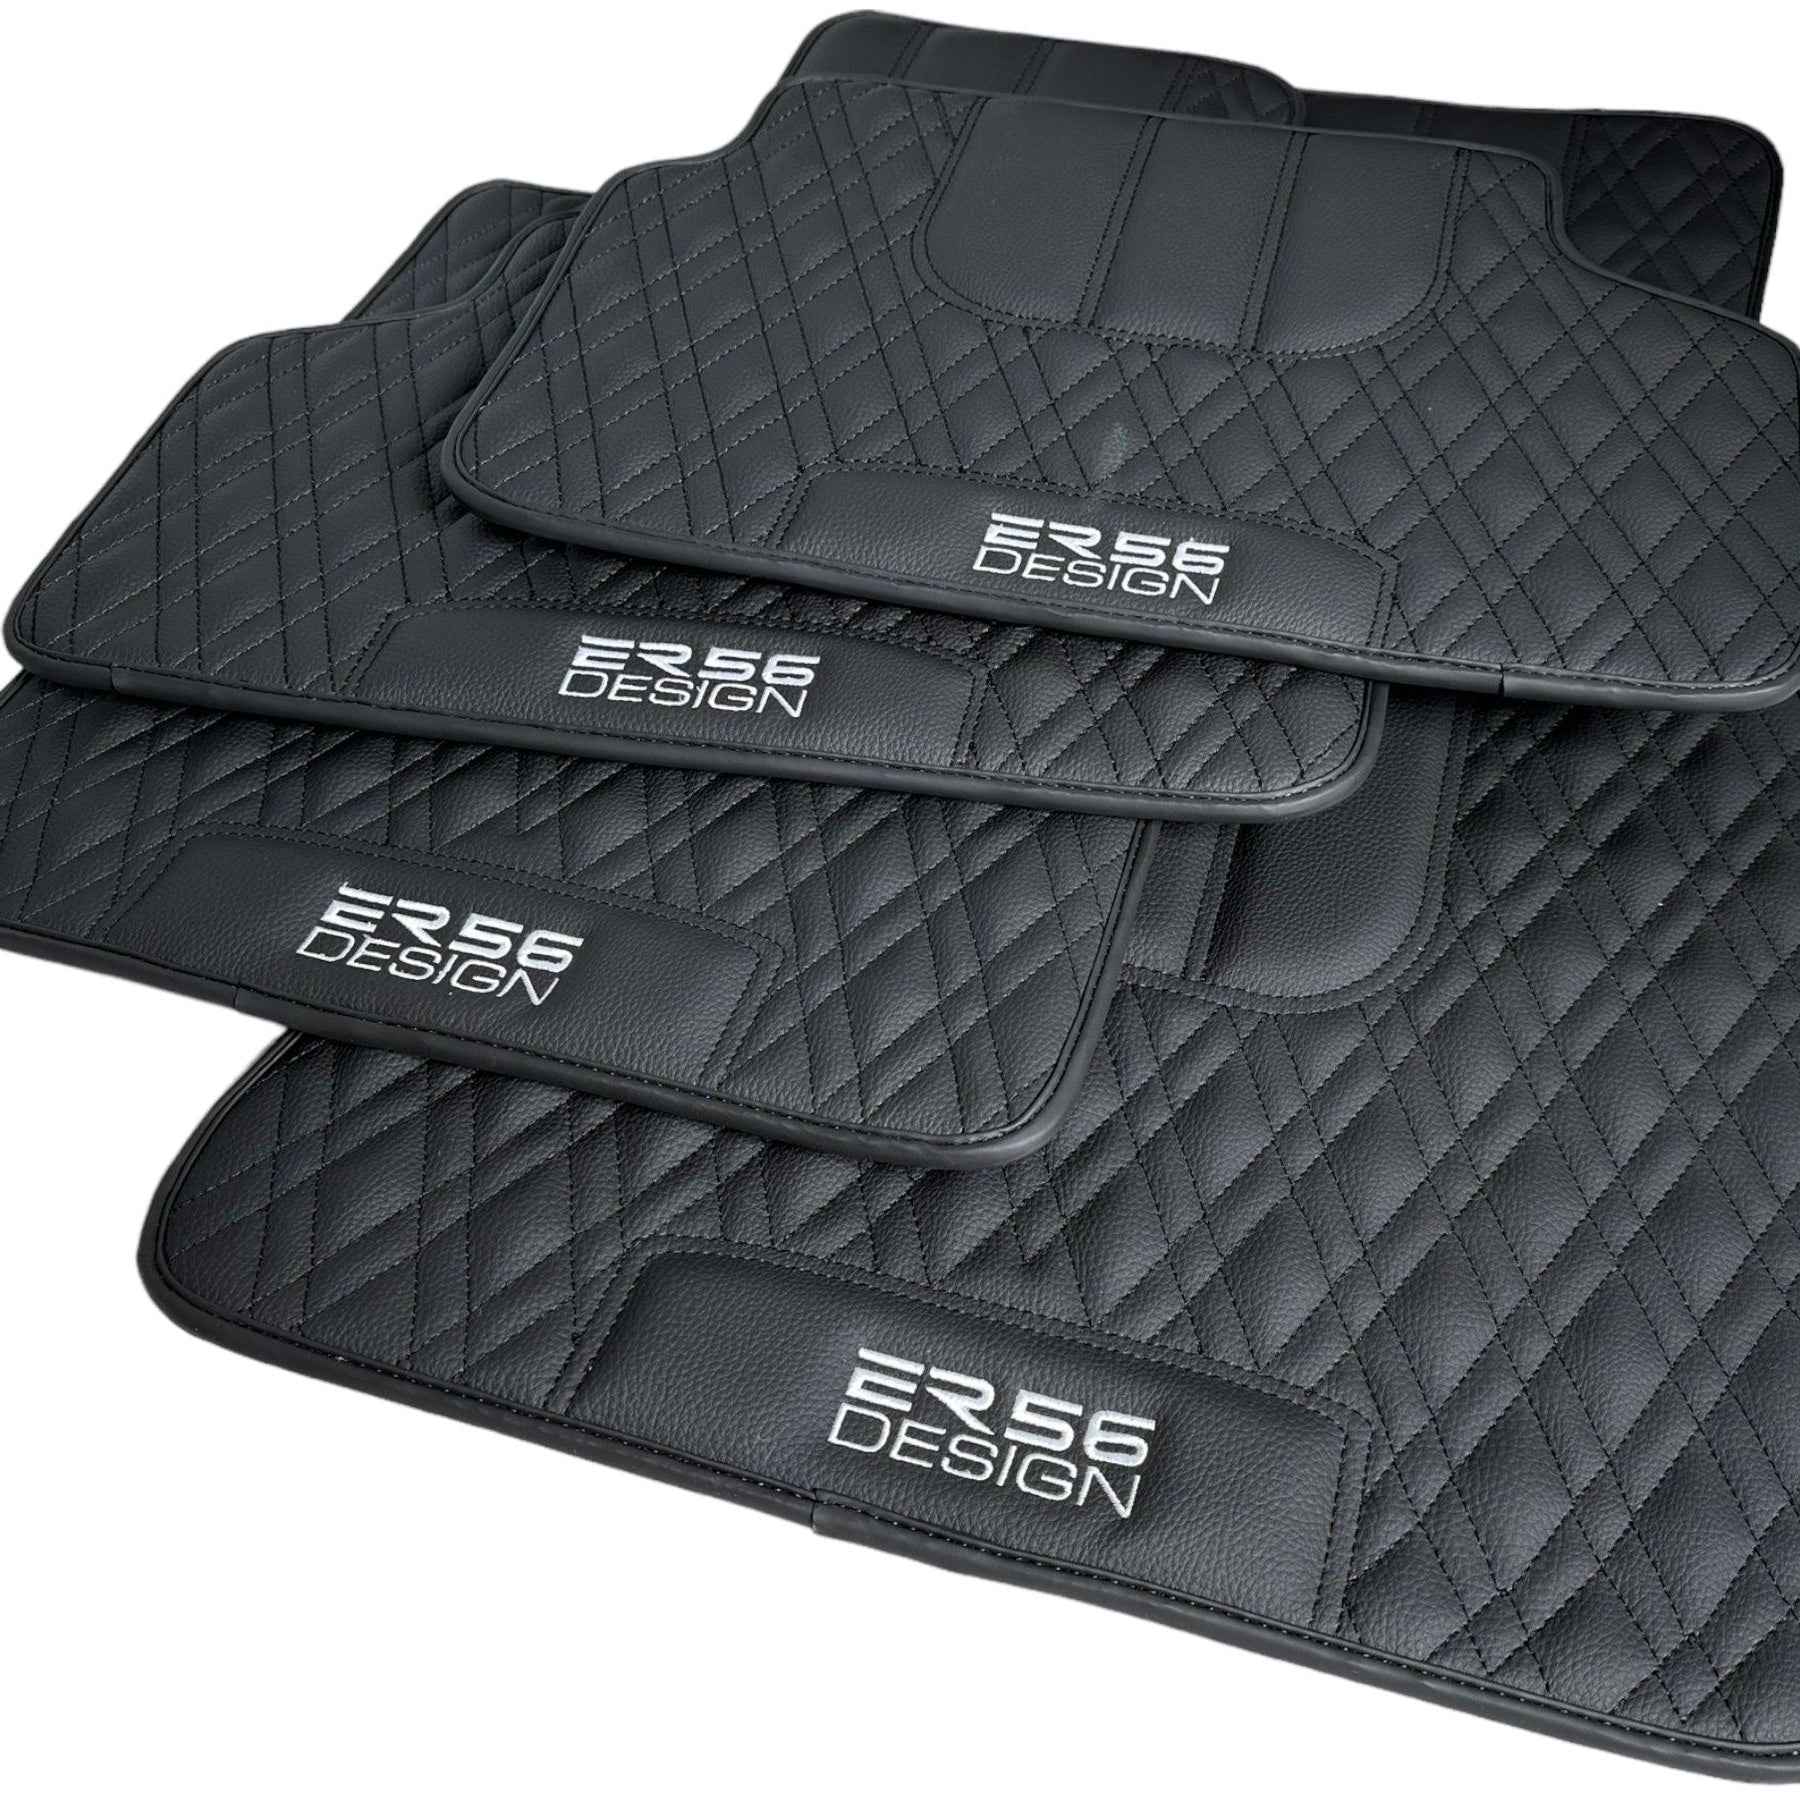 Floor Mats For BMW M3 E36 Black Leather Er56 Design - AutoWin